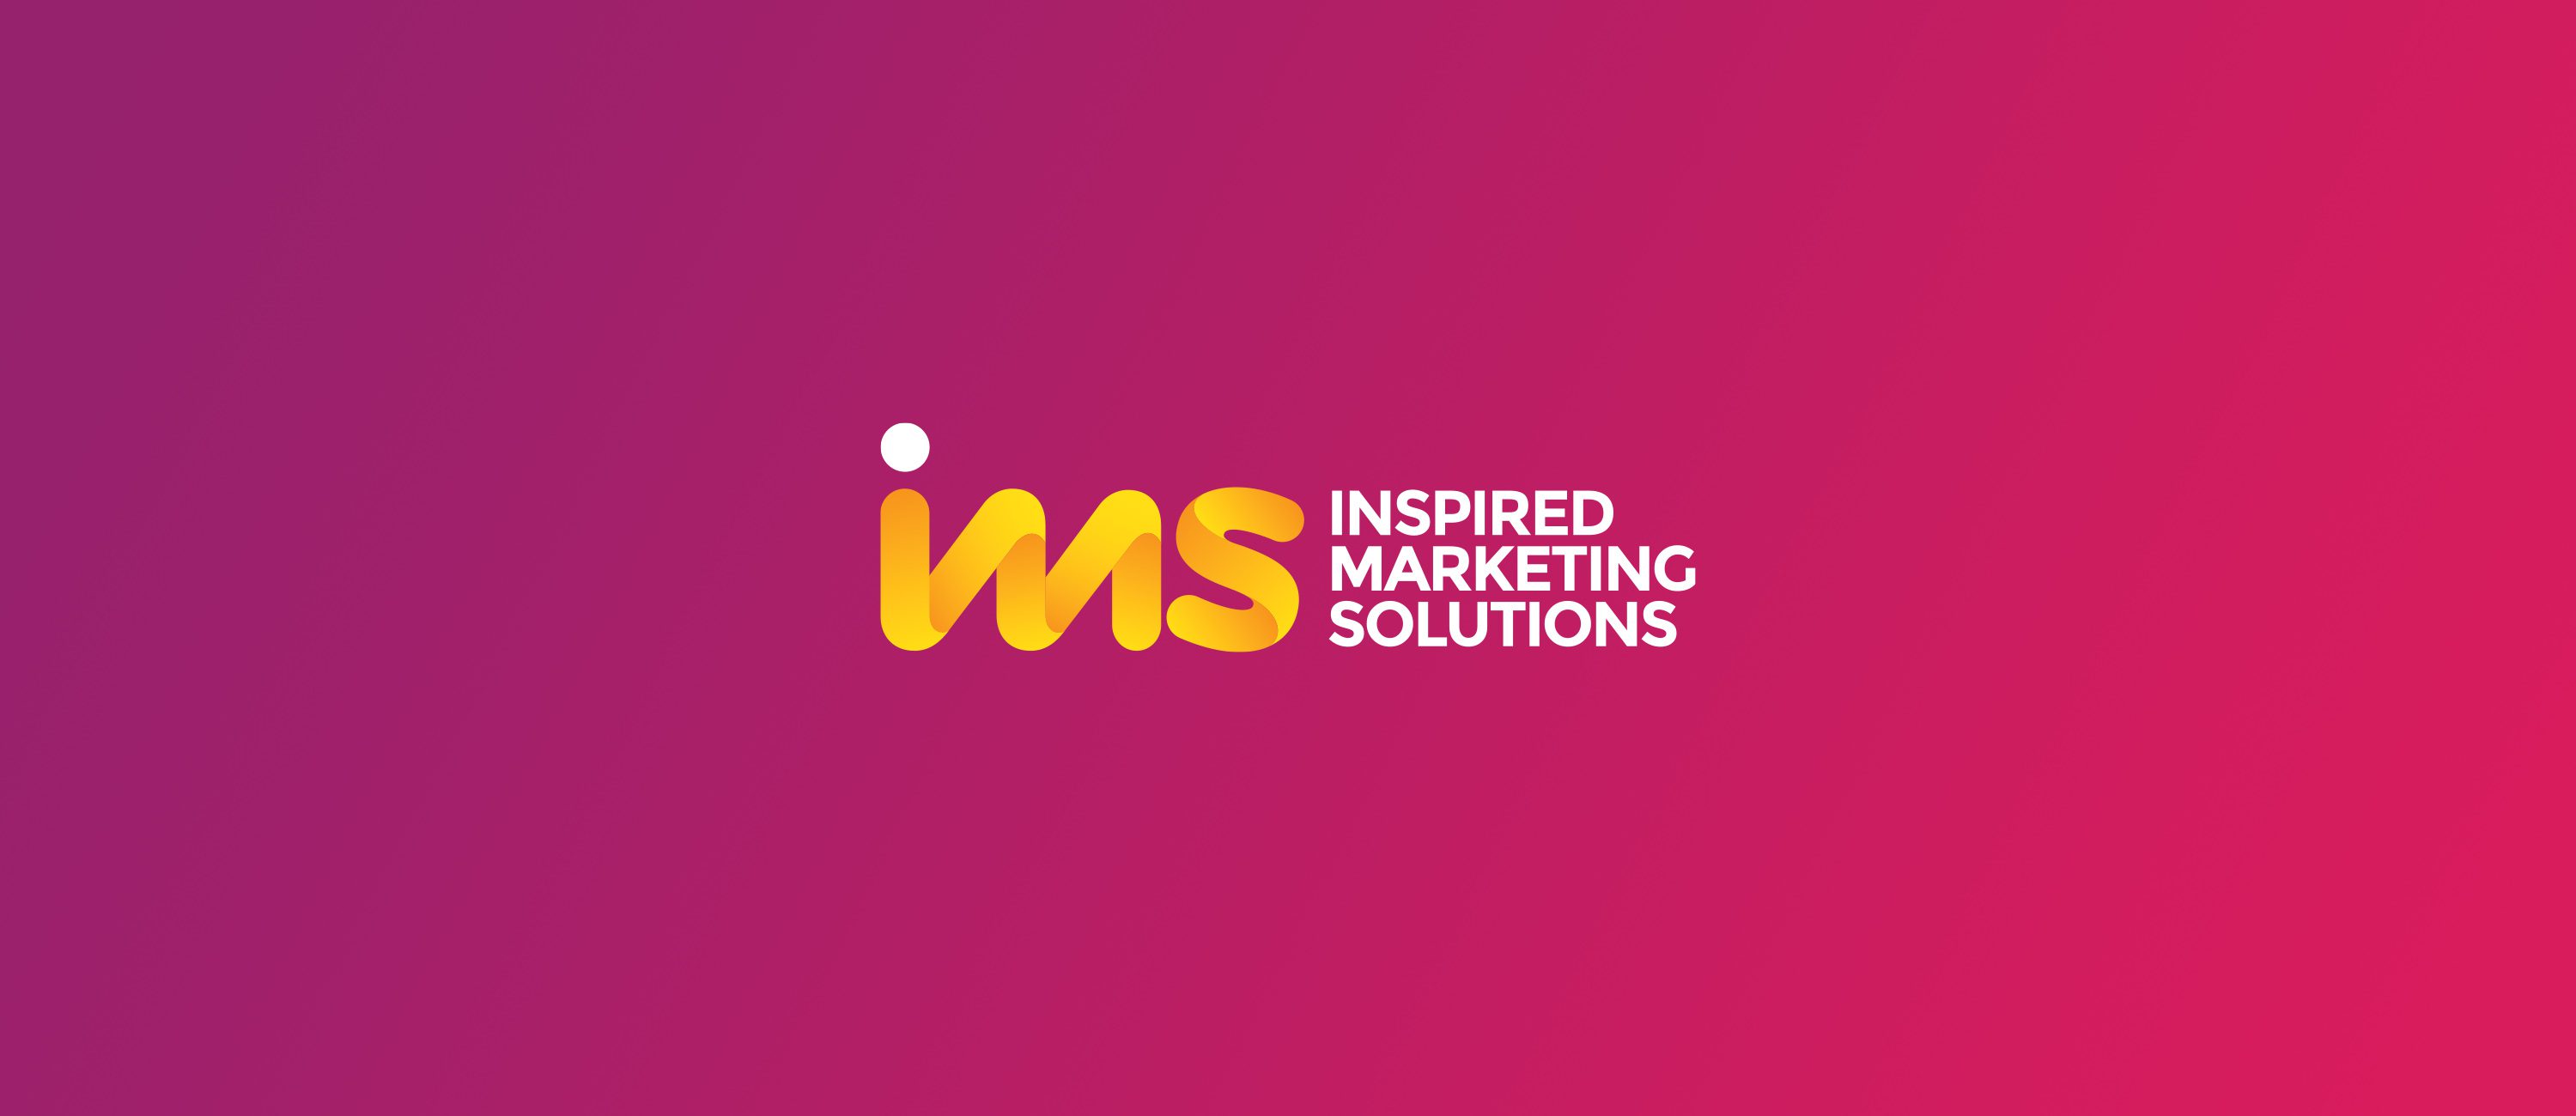 Inspired Marketing Solutions branding